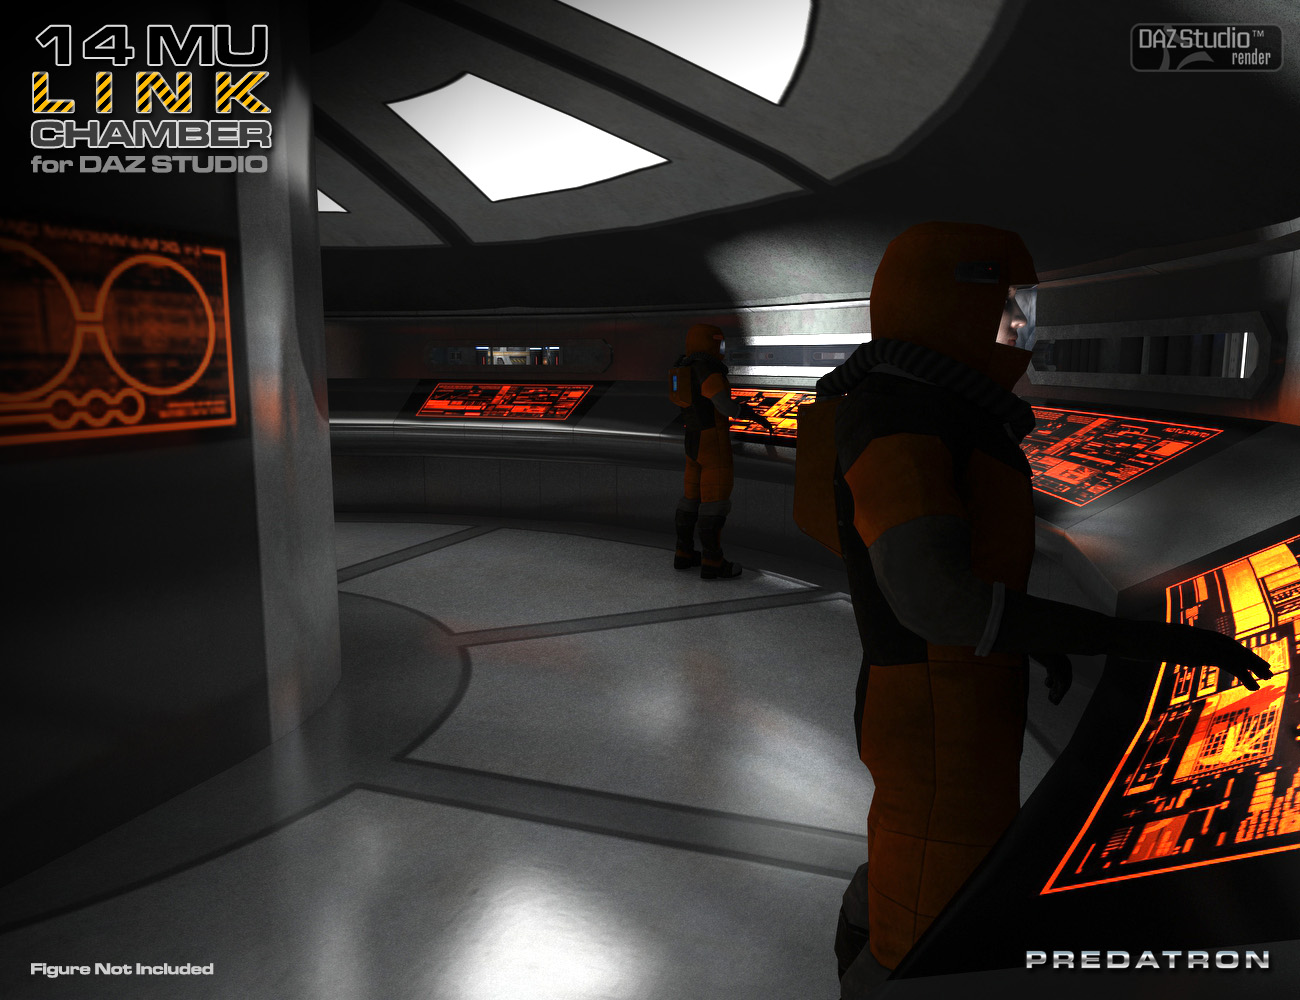 14MU Link Chamber for DAZ Studio by: Predatron, 3D Models by Daz 3D